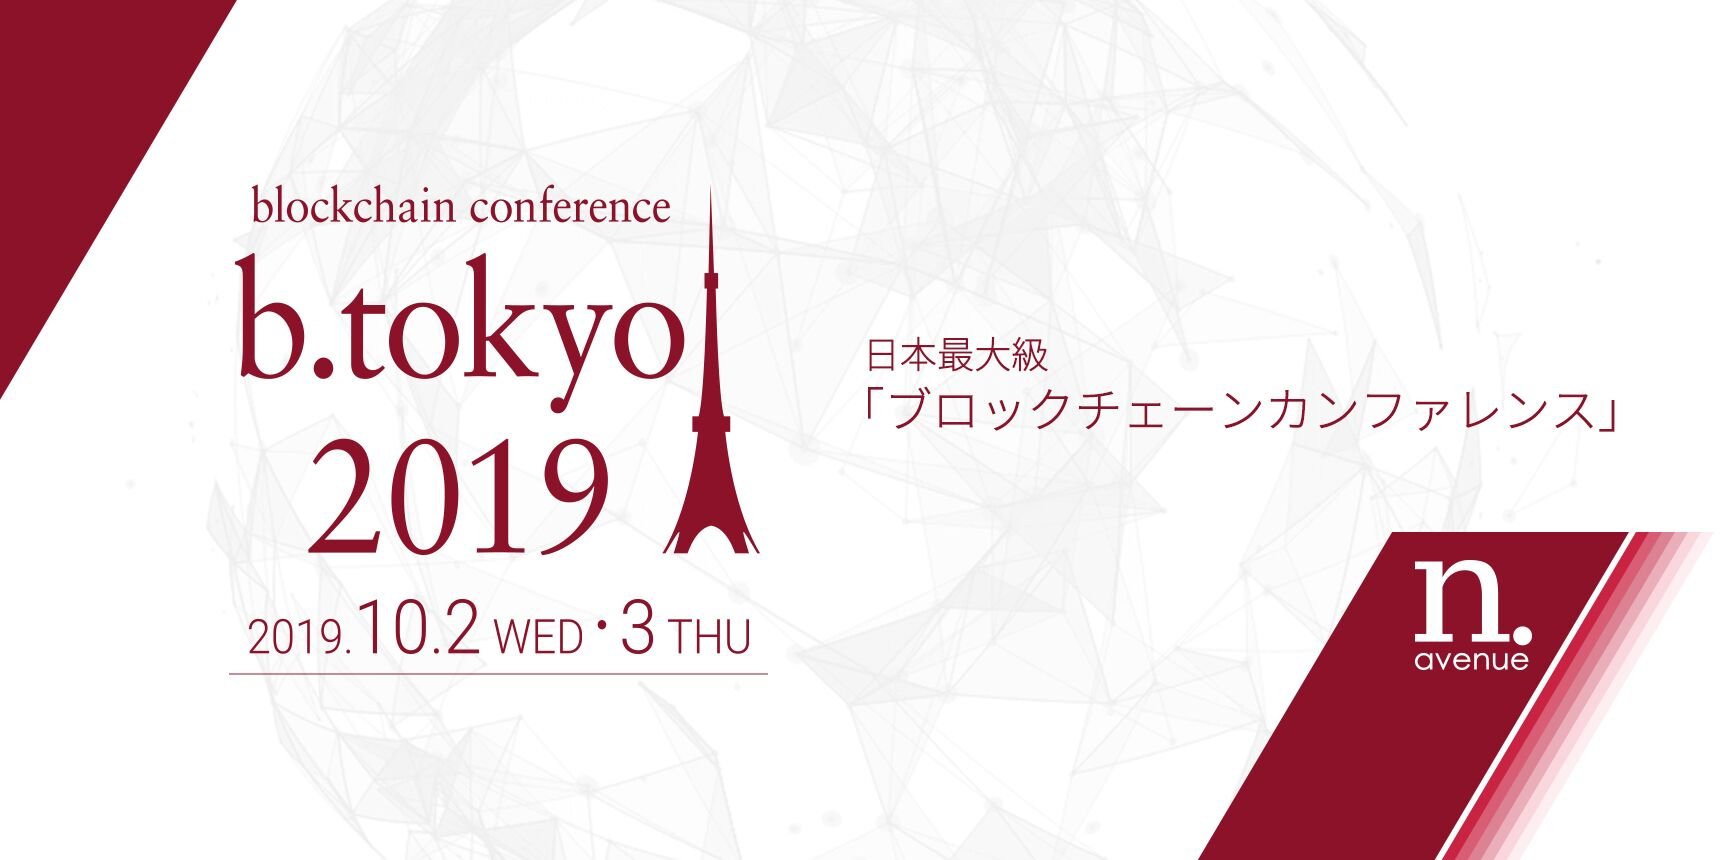 Blockchain conference b.tokyo 2019